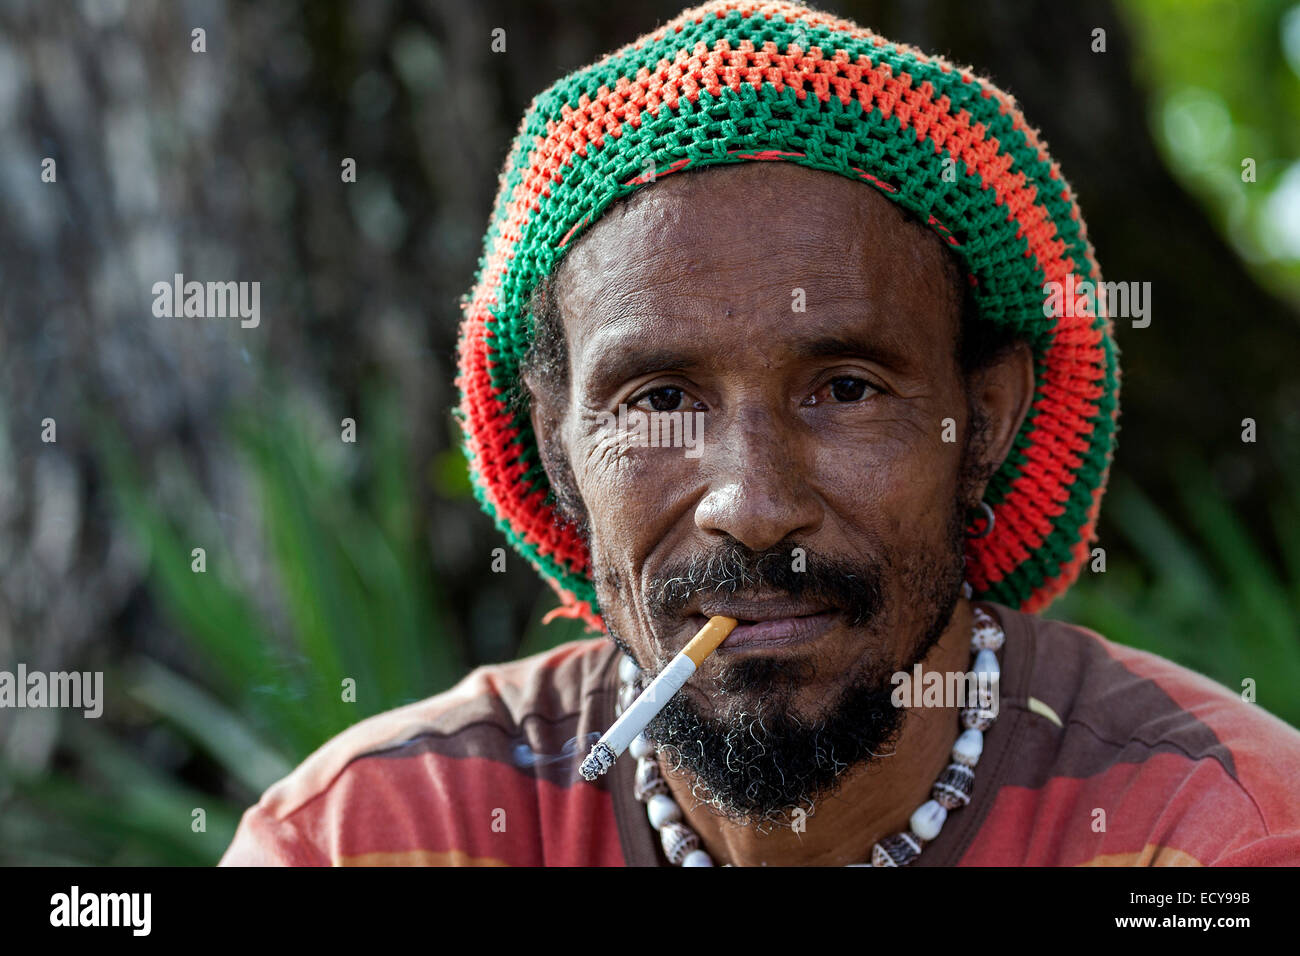 Jamaican Dreadlocks Hat